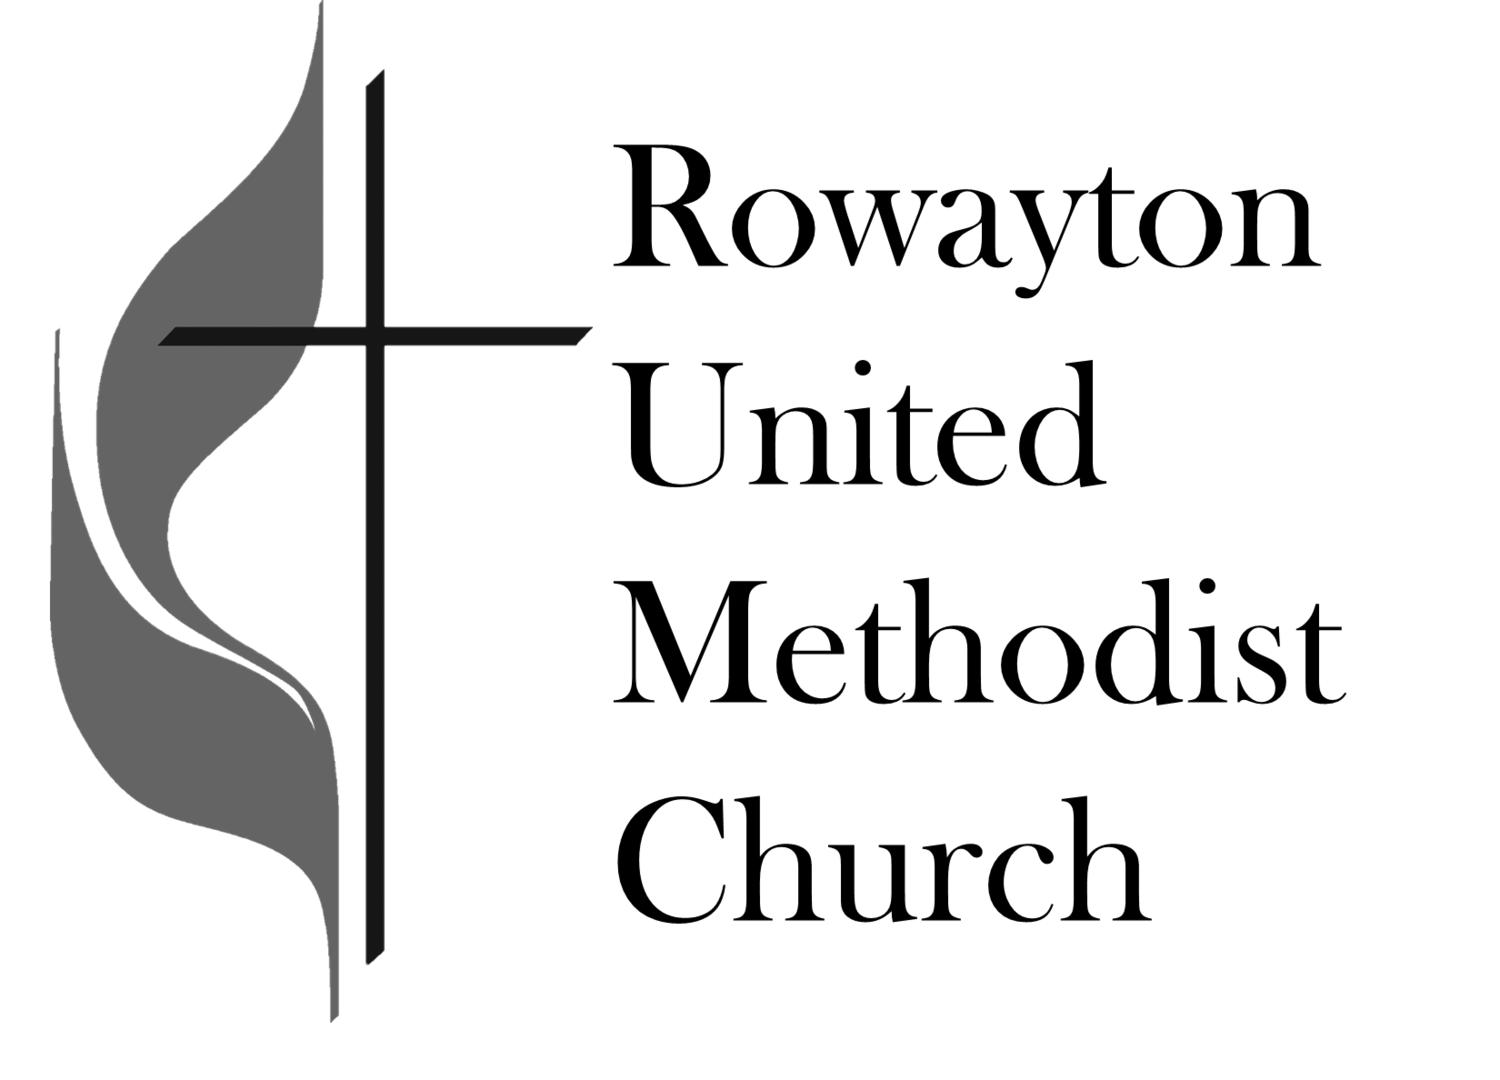 The Rowayton United Methodist Church